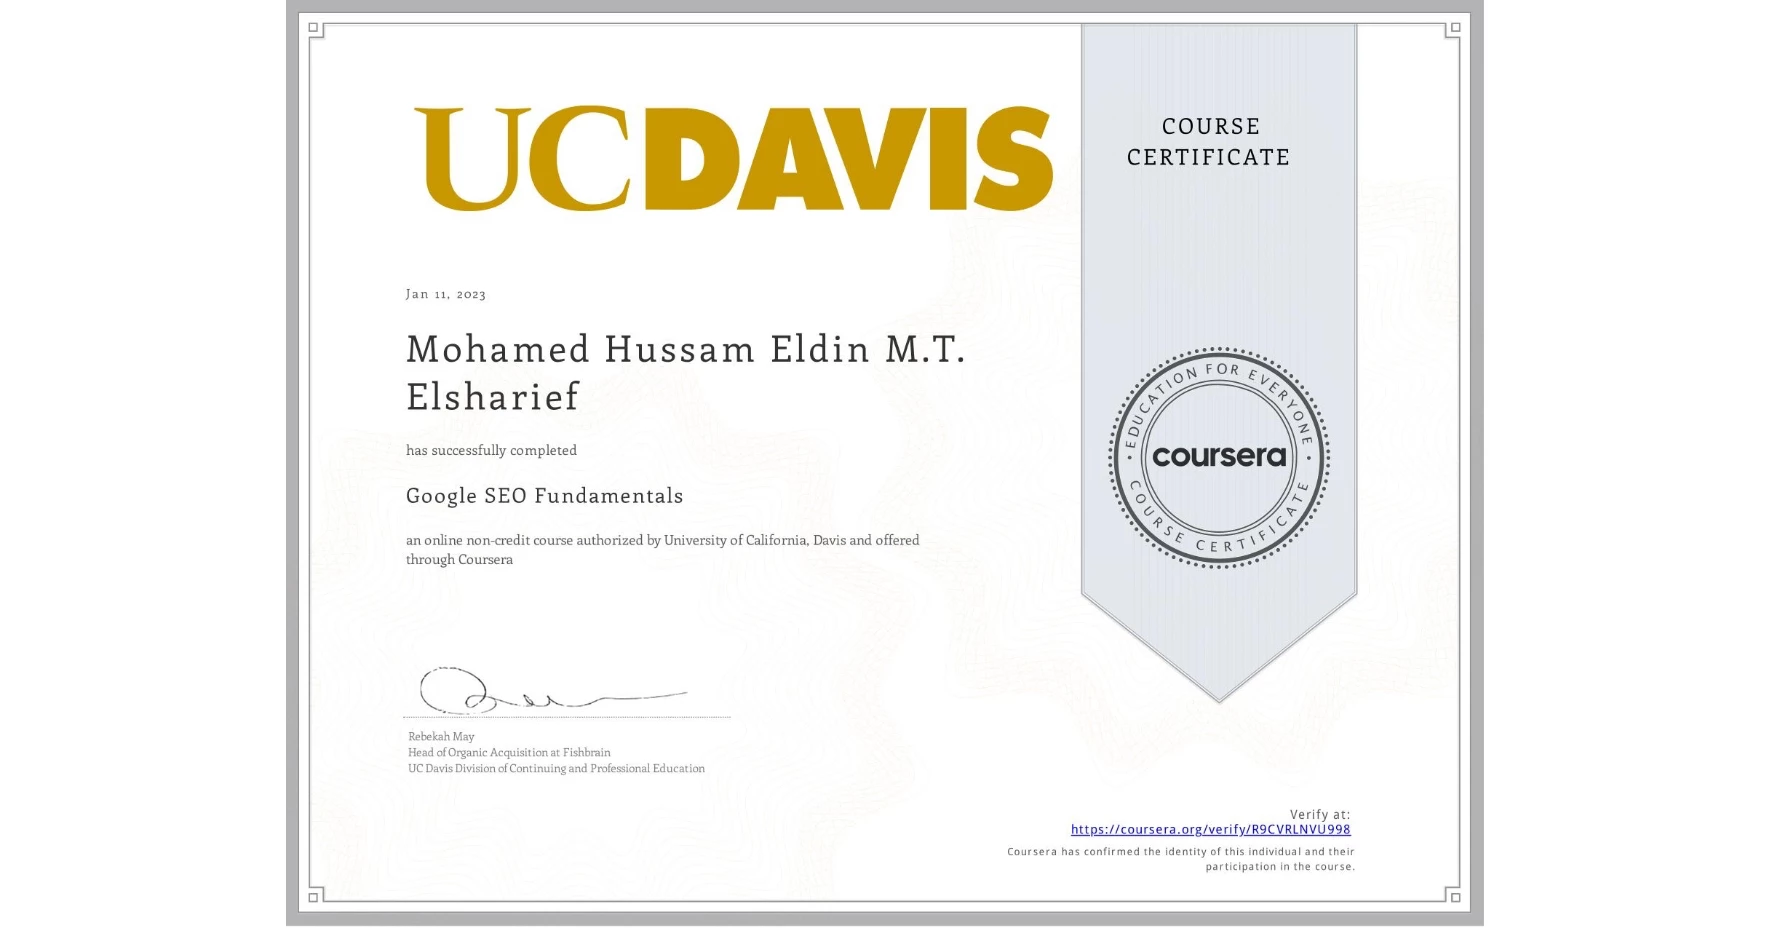 MohamedSharief's UCDAVIS Certificate